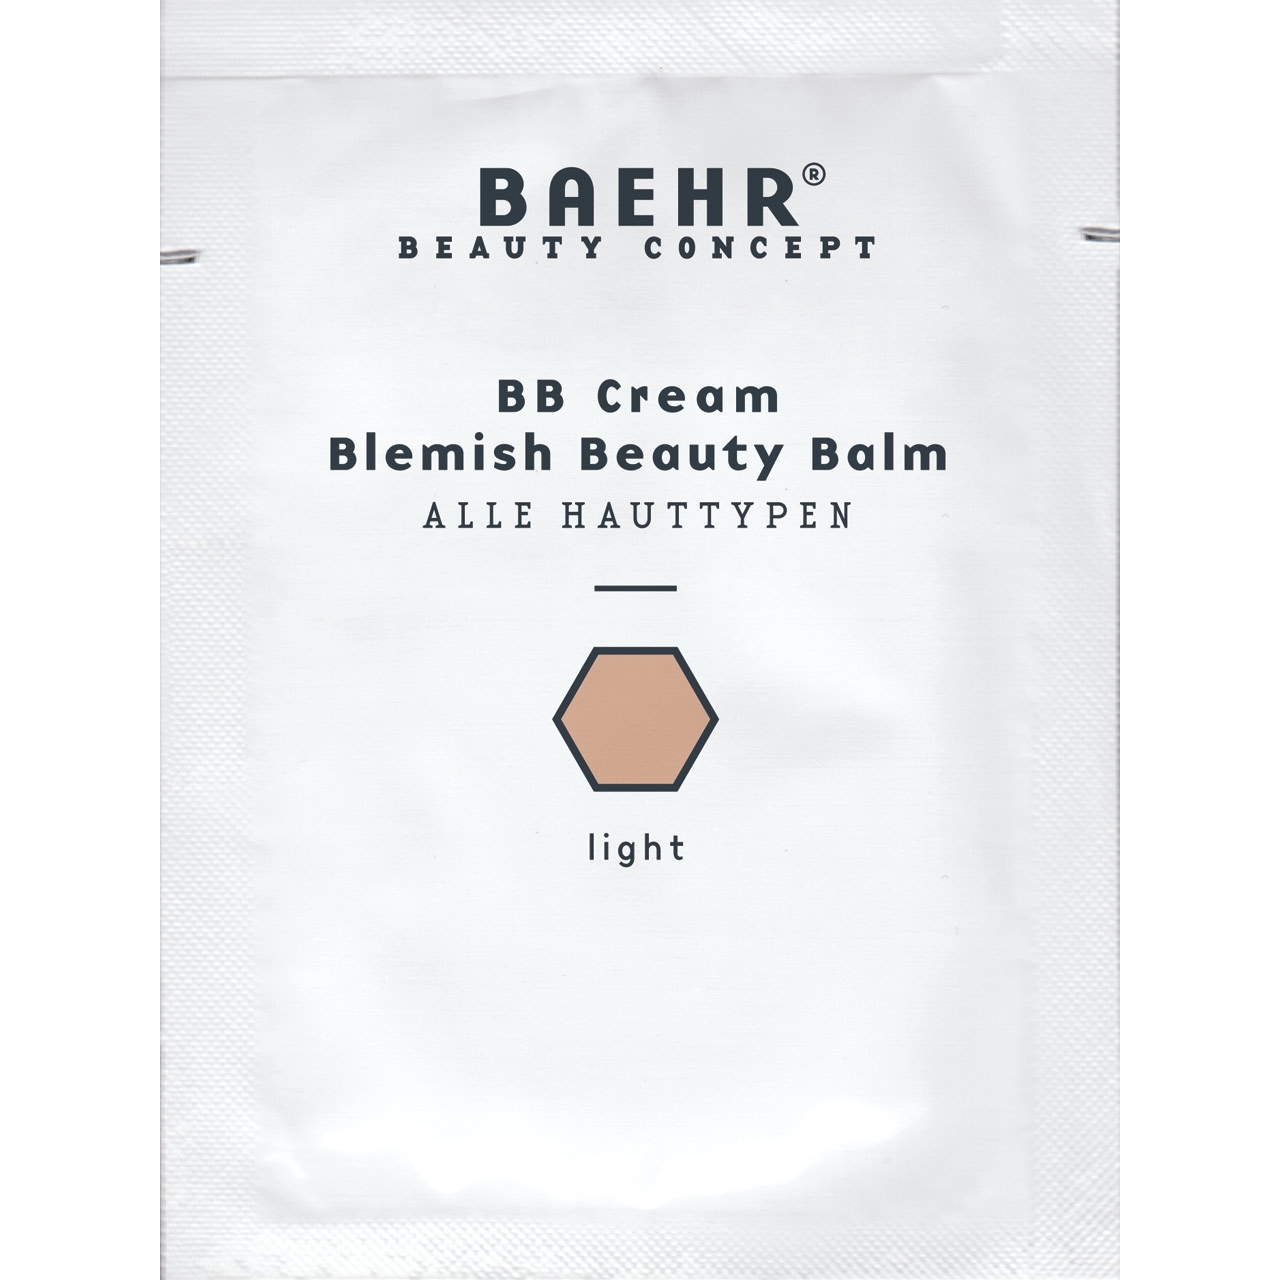 BAEHR BEAUTY CONCEPT - BB Cream light Blemish Beauty Balm, Sachet 2 ml